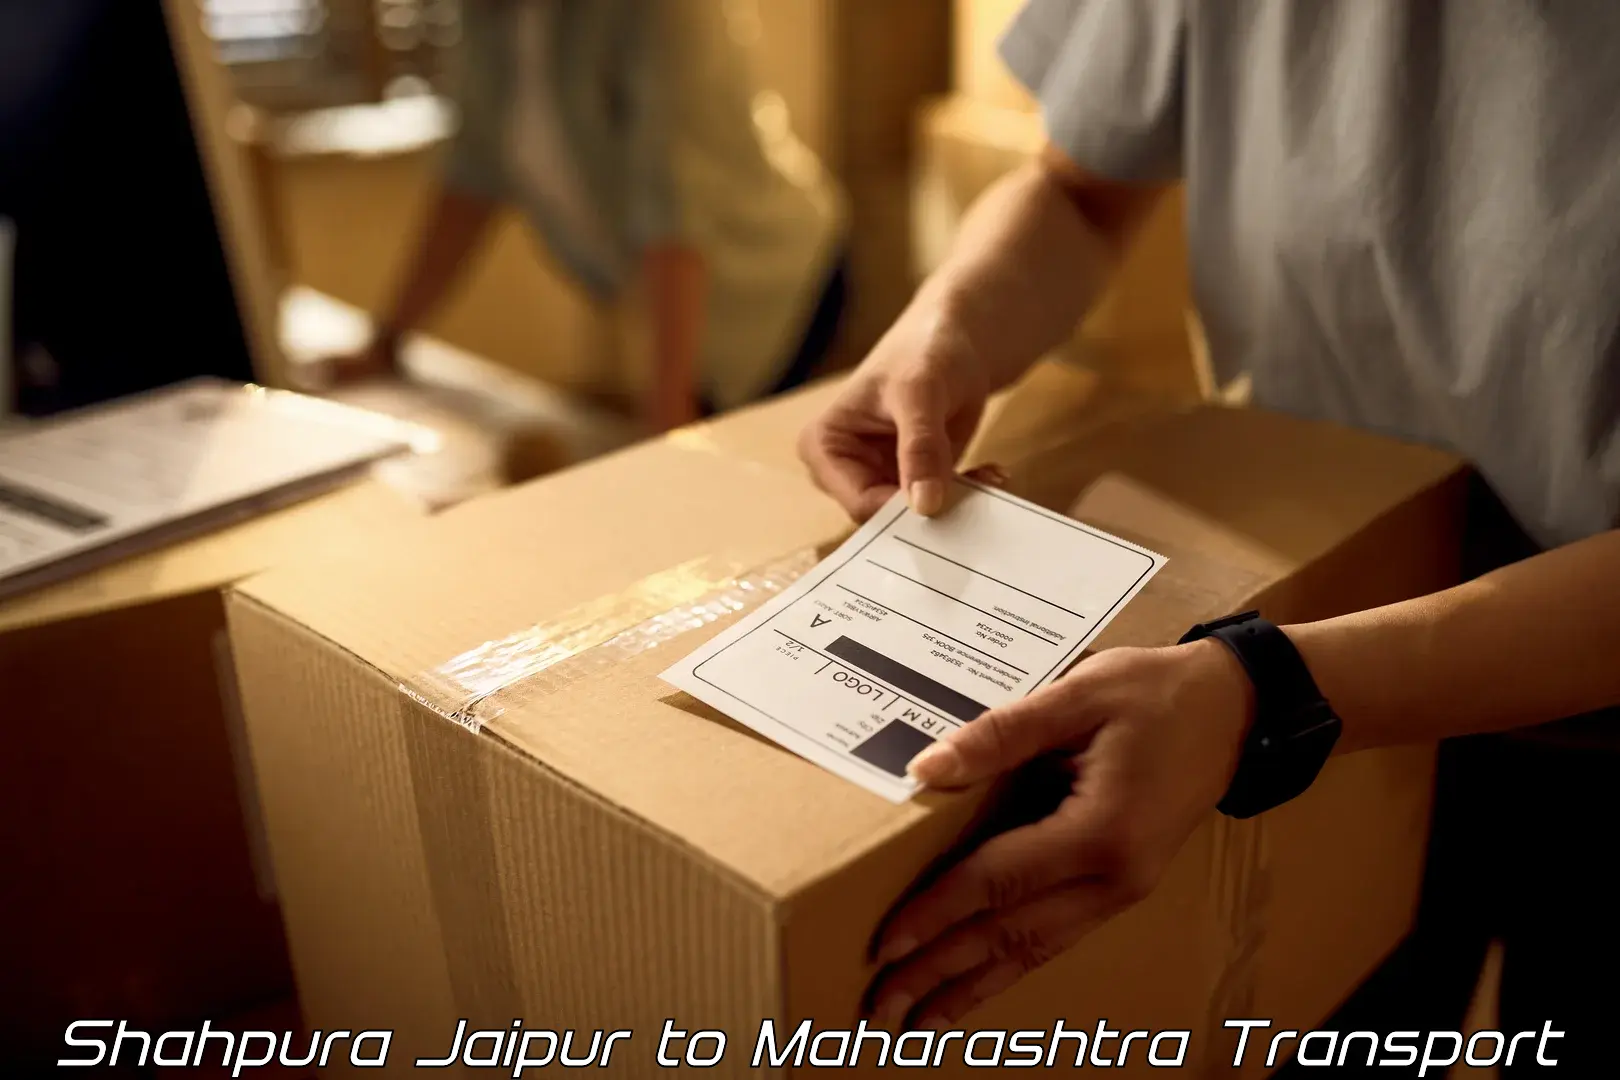 Container transport service Shahpura Jaipur to Ahmednagar